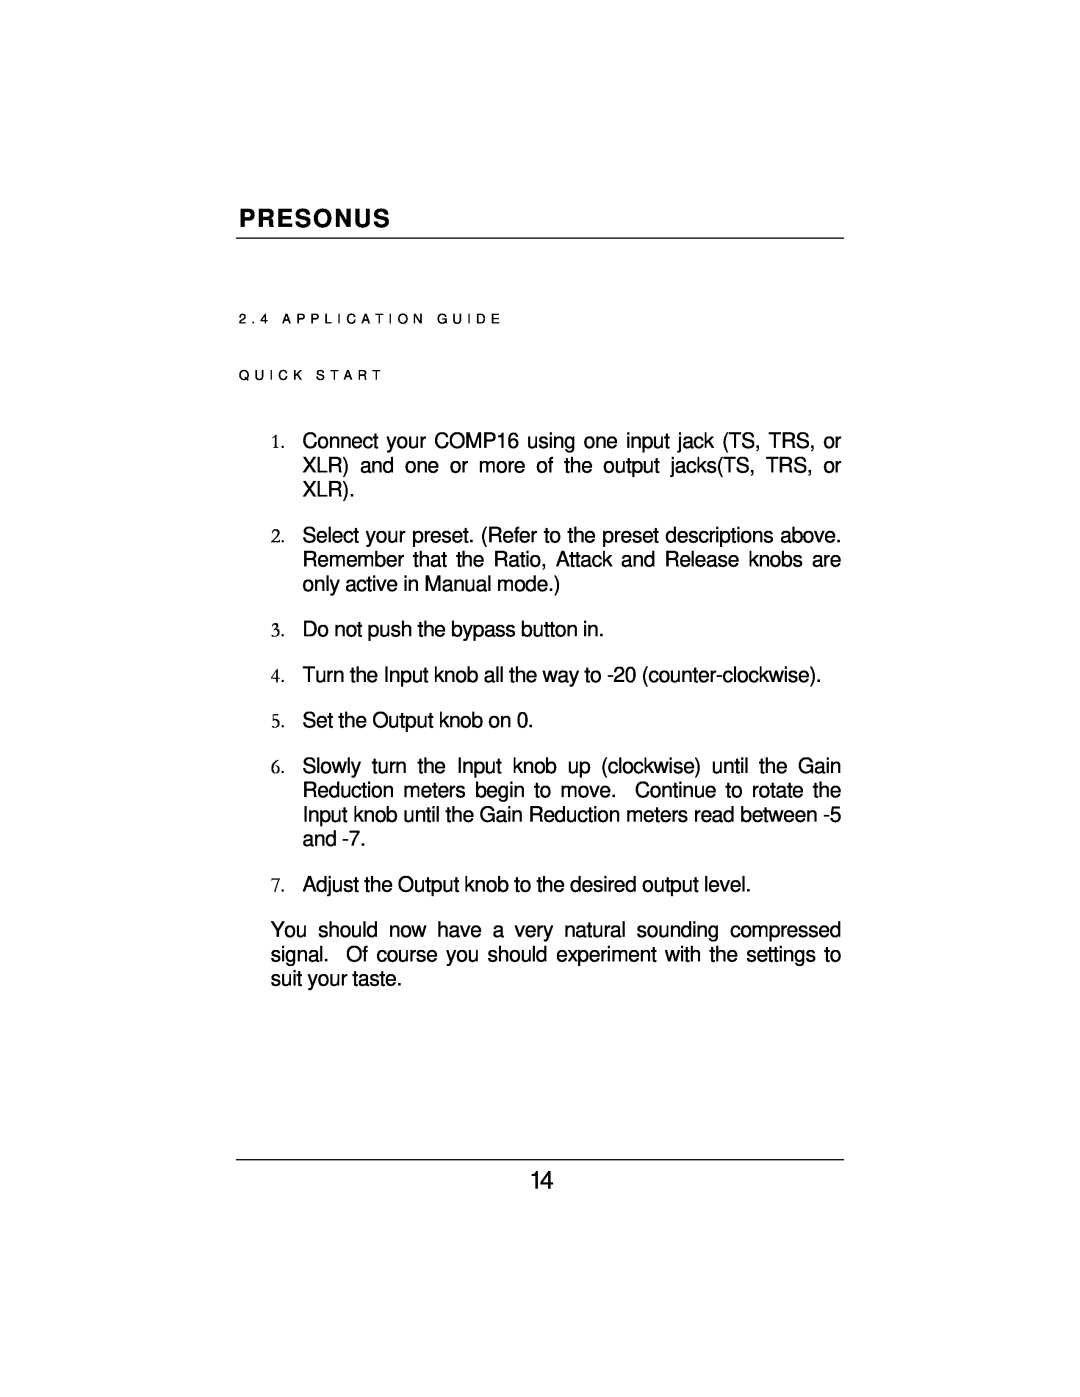 Presonus Audio electronic COMP16, EQ3B, HP4 user manual Presonus 